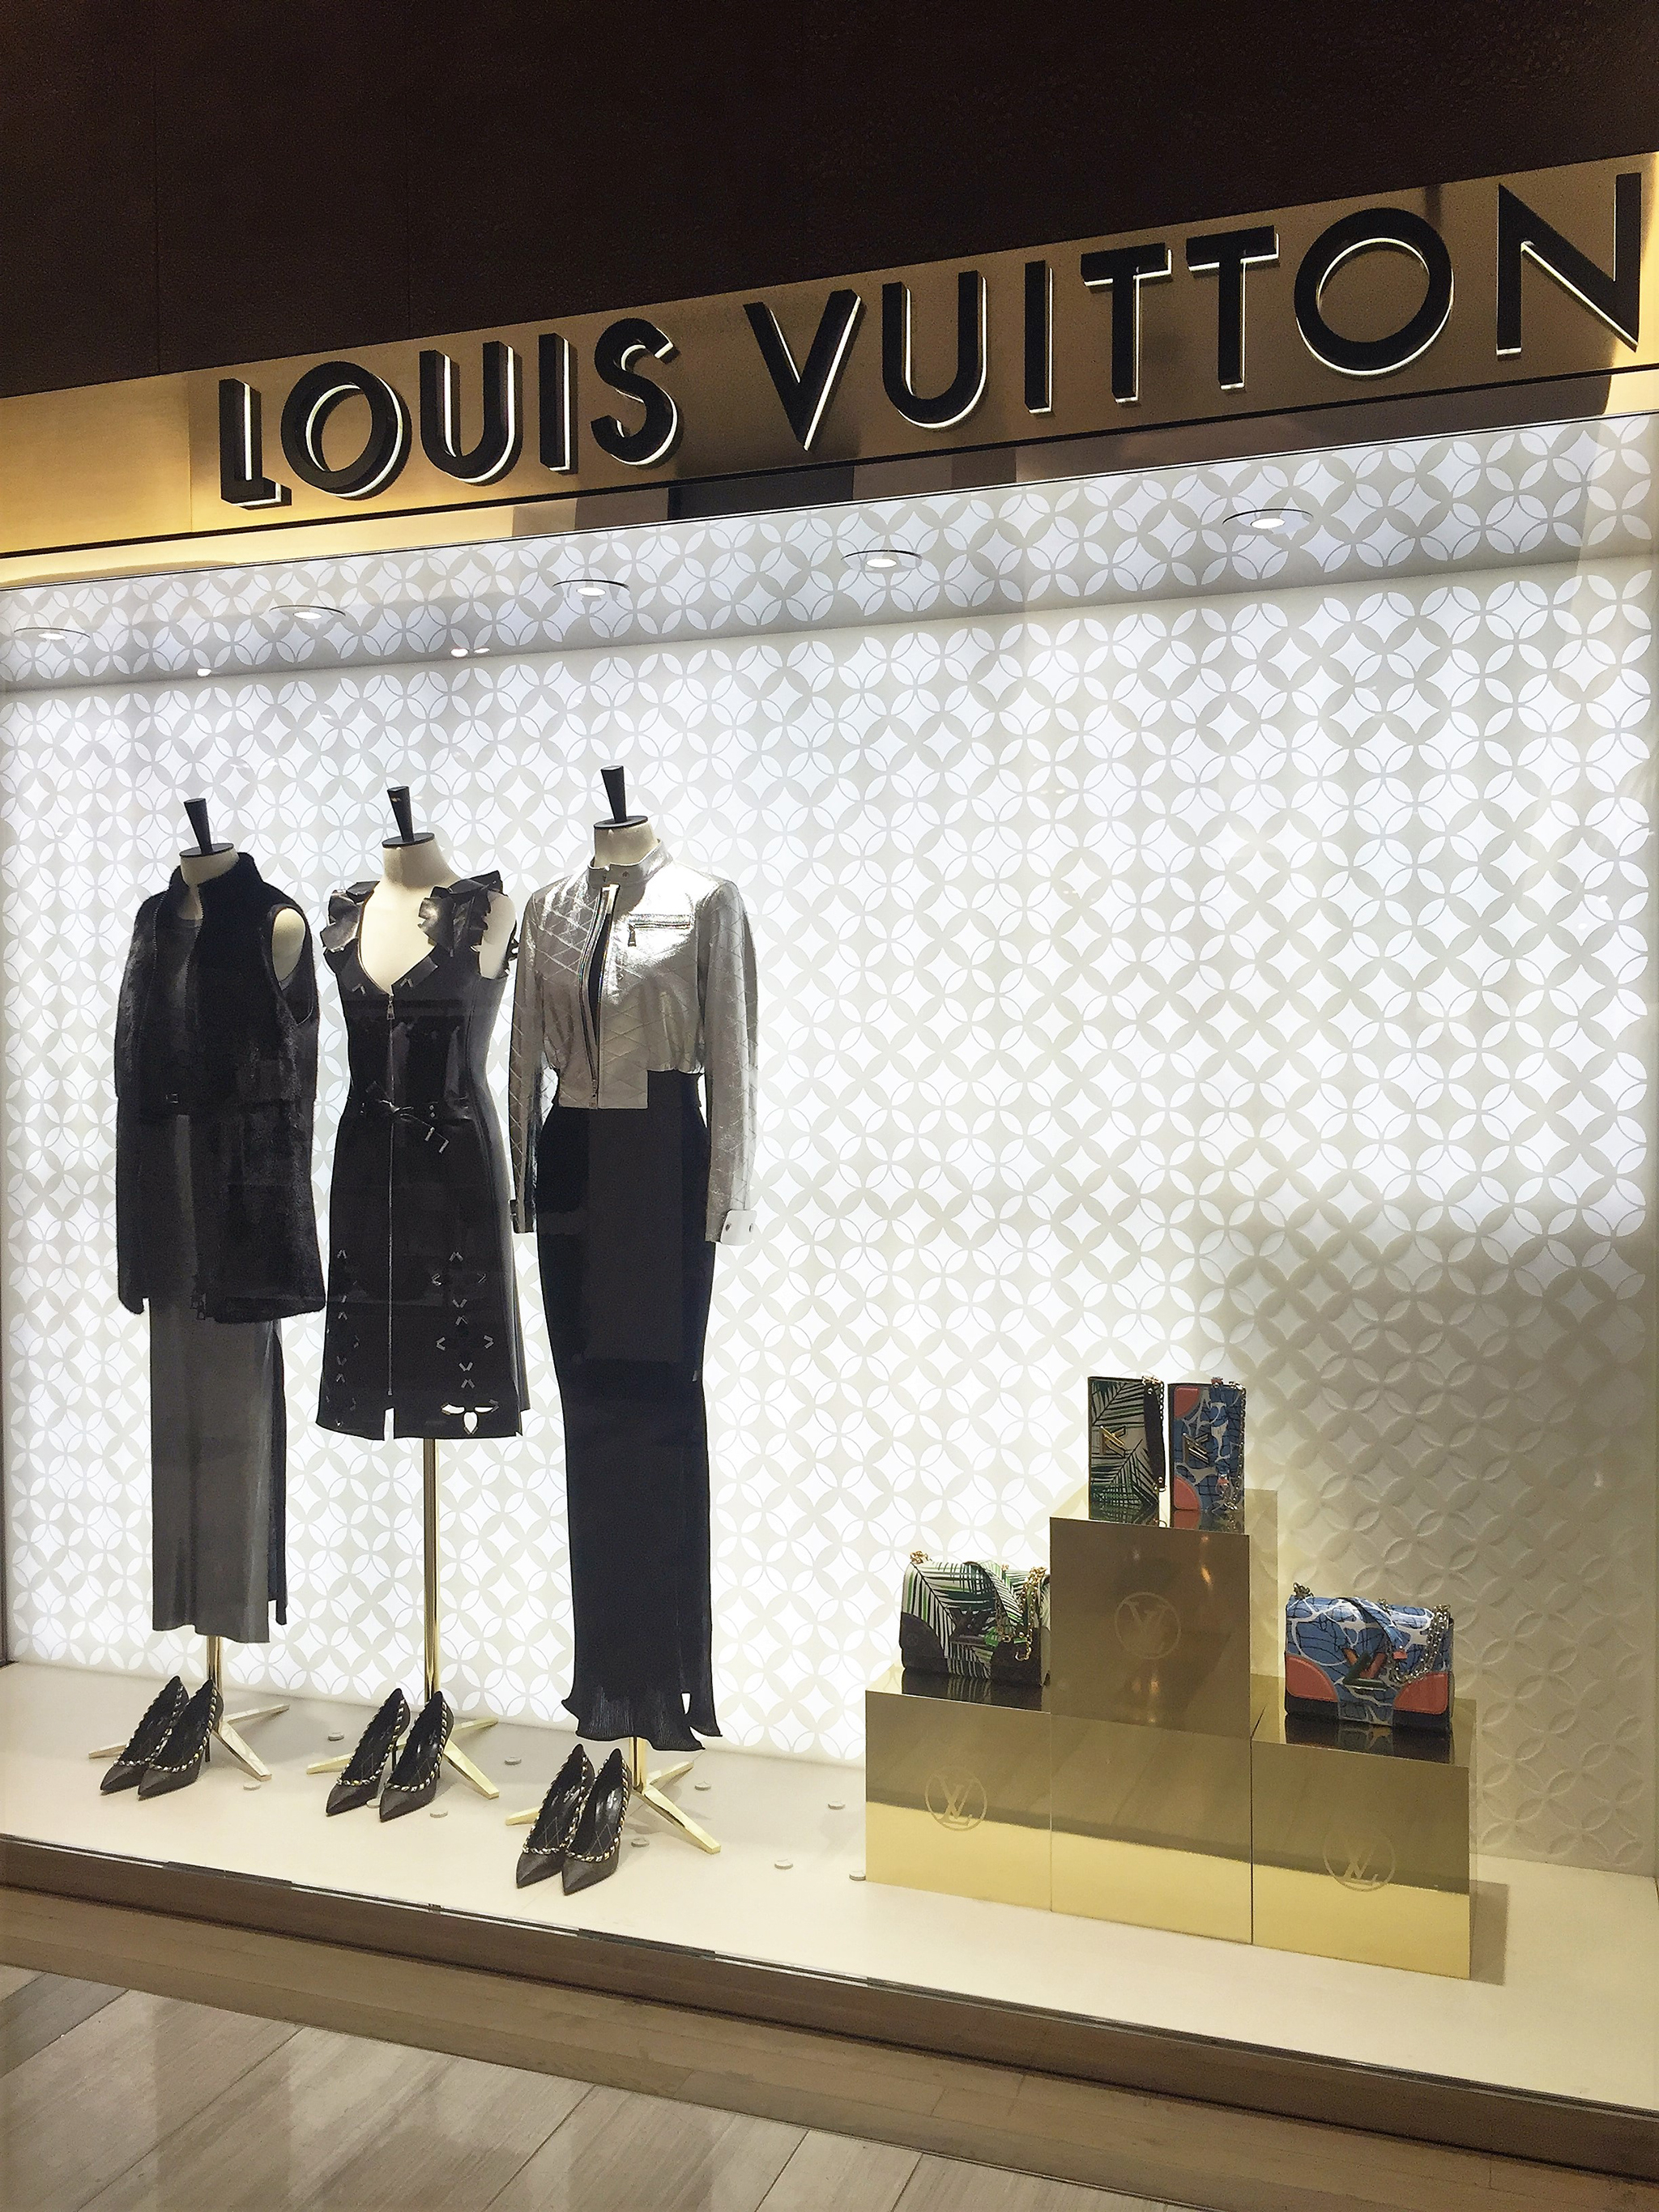 Louis Vuitton - The windows at the Louis Vuitton Fifth Avenue